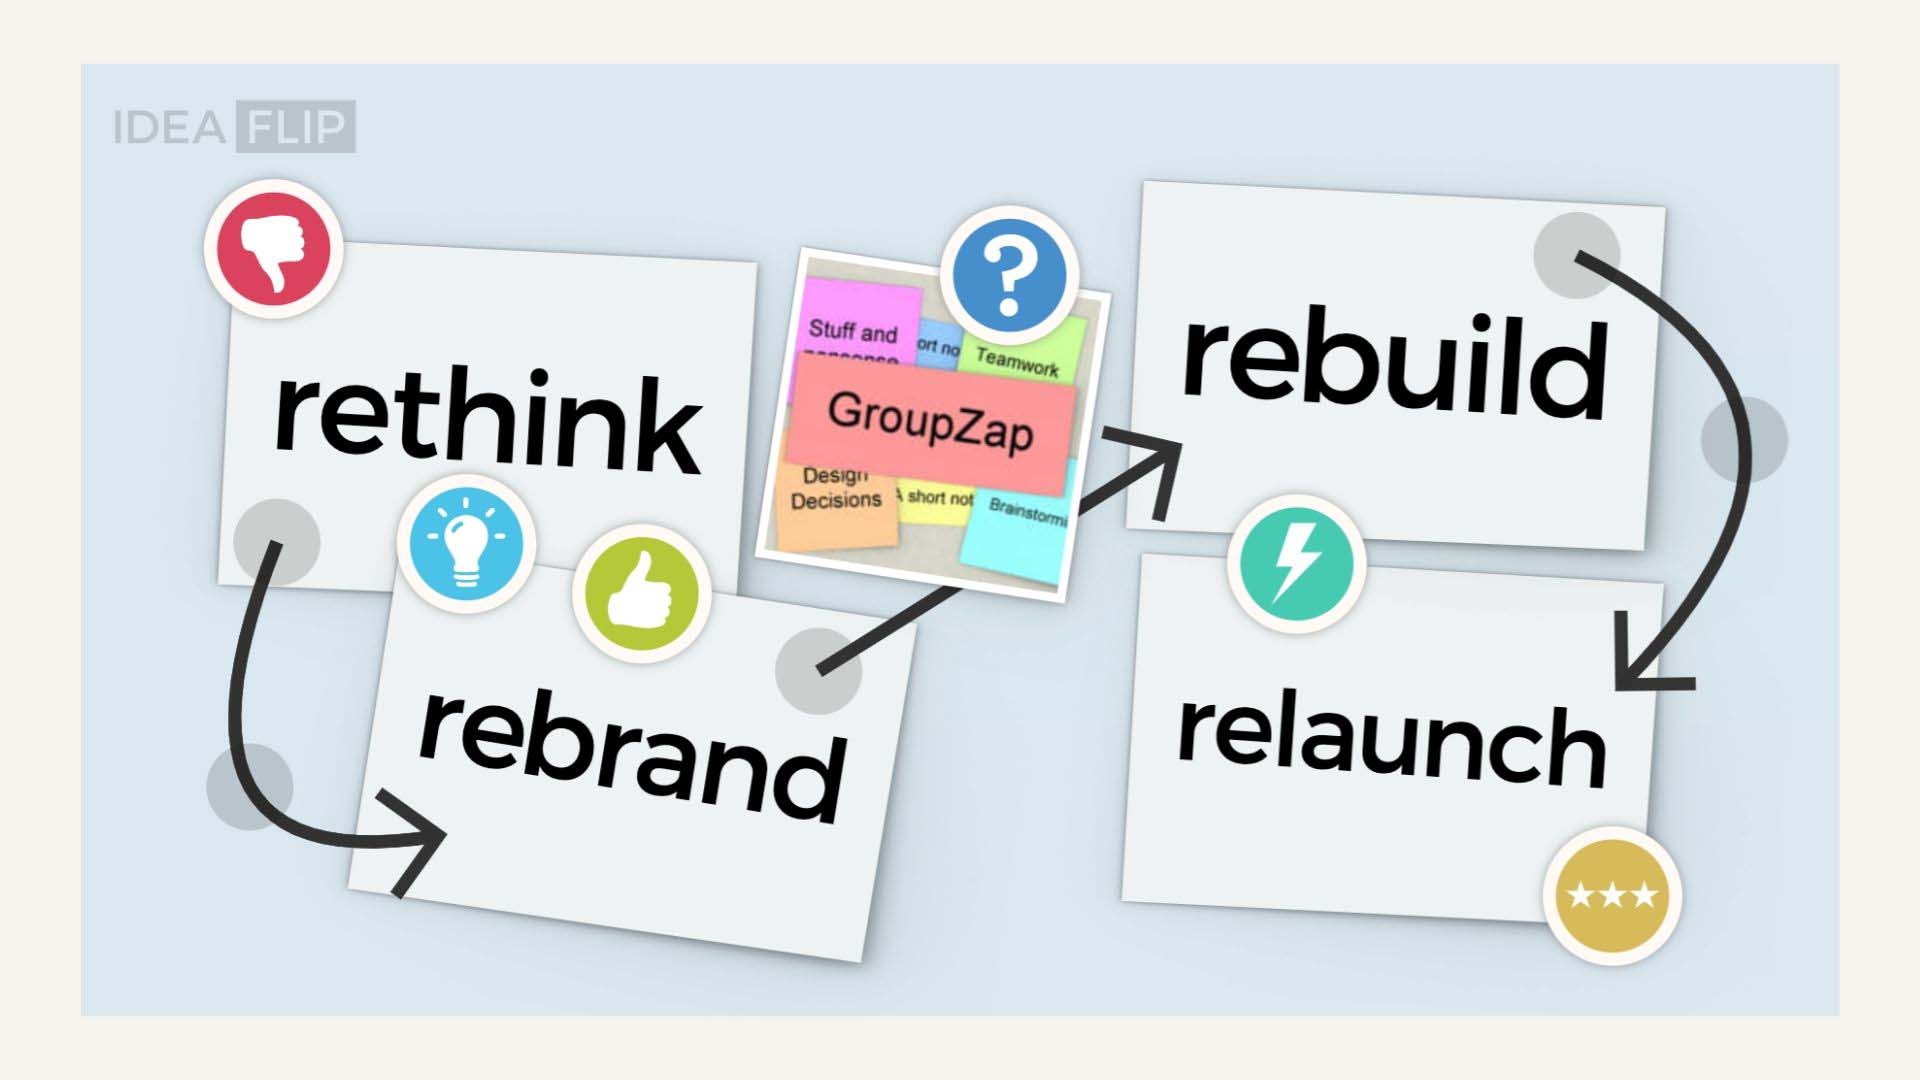 Rethink-Rebrand-Rebuild-Relaunch